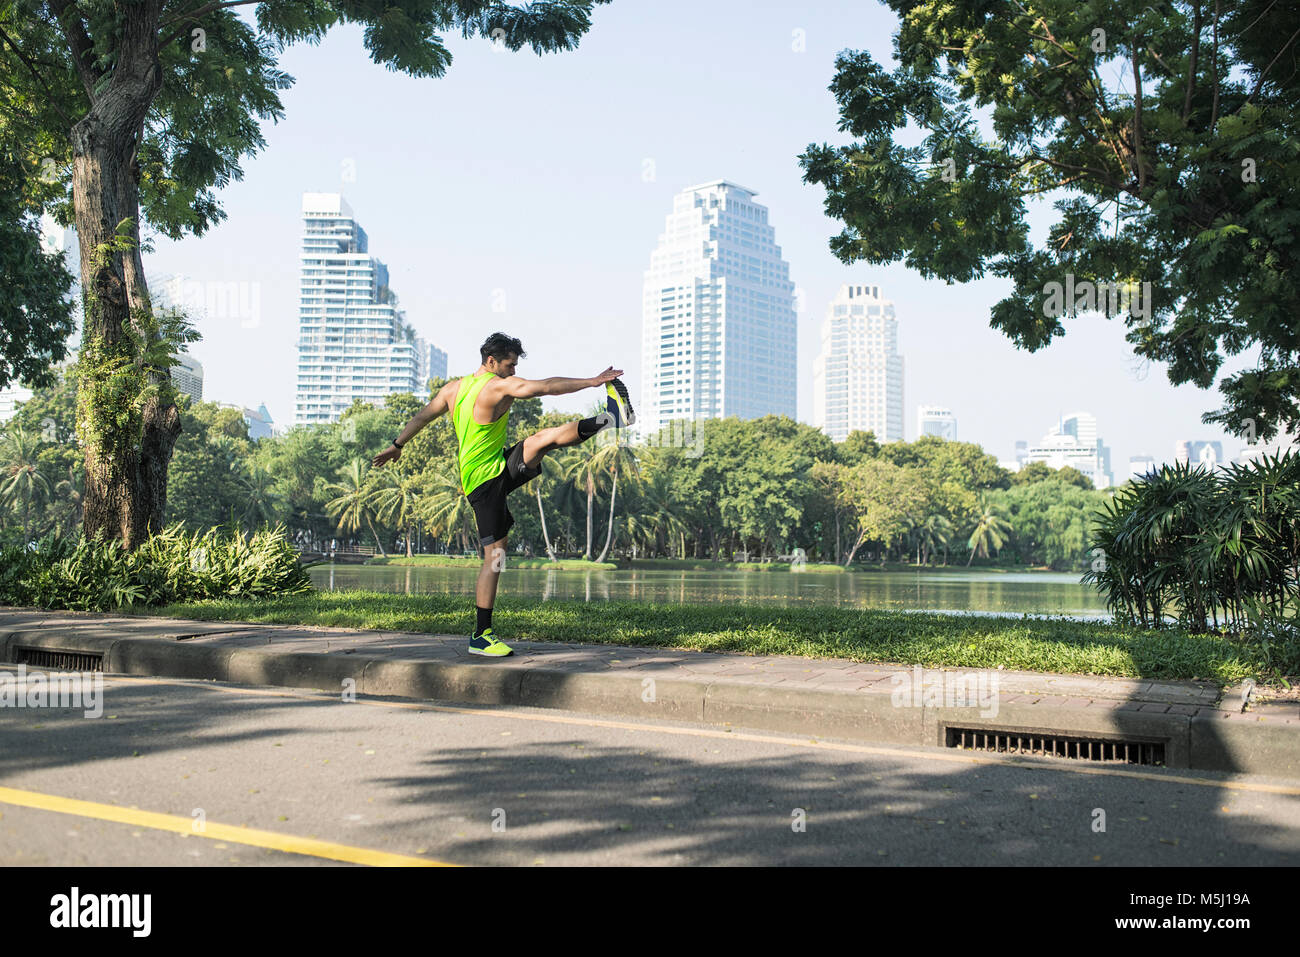 Runner warming up in urban park Stock Photo